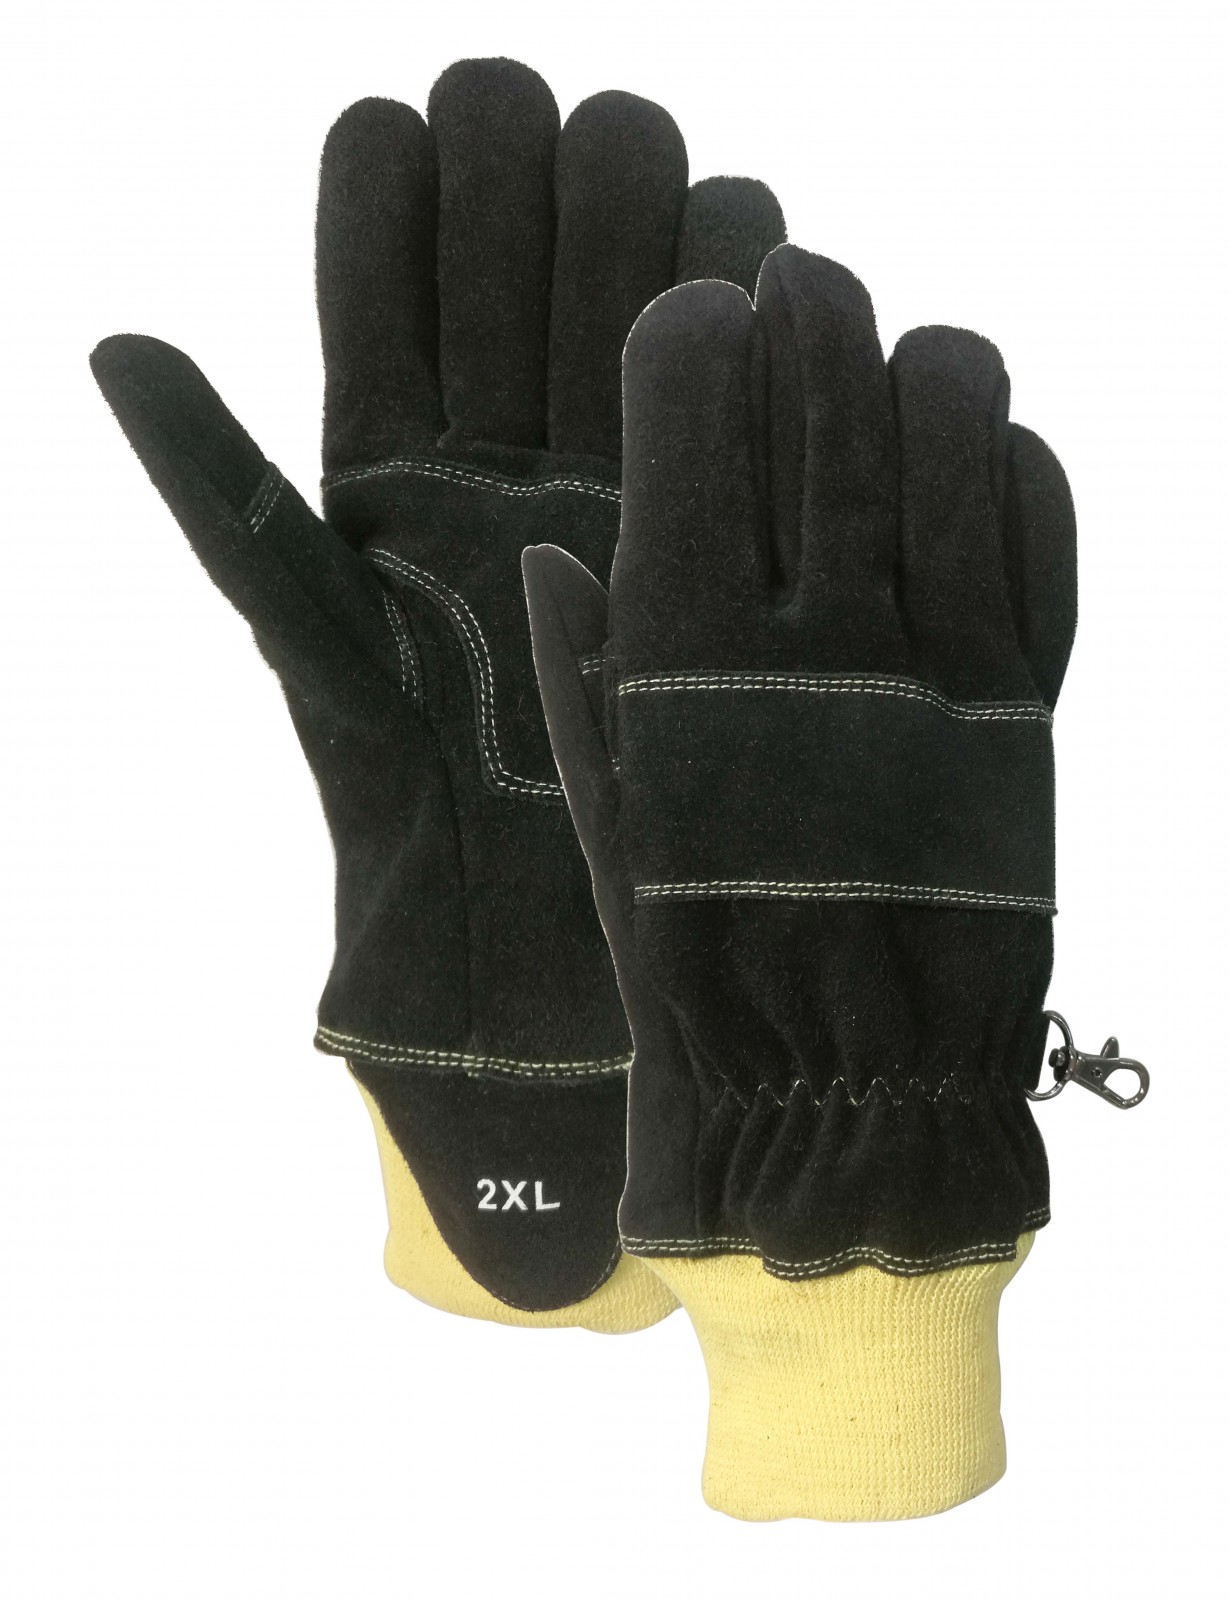 Five-fingered fireman's gloves from spilk article 7923